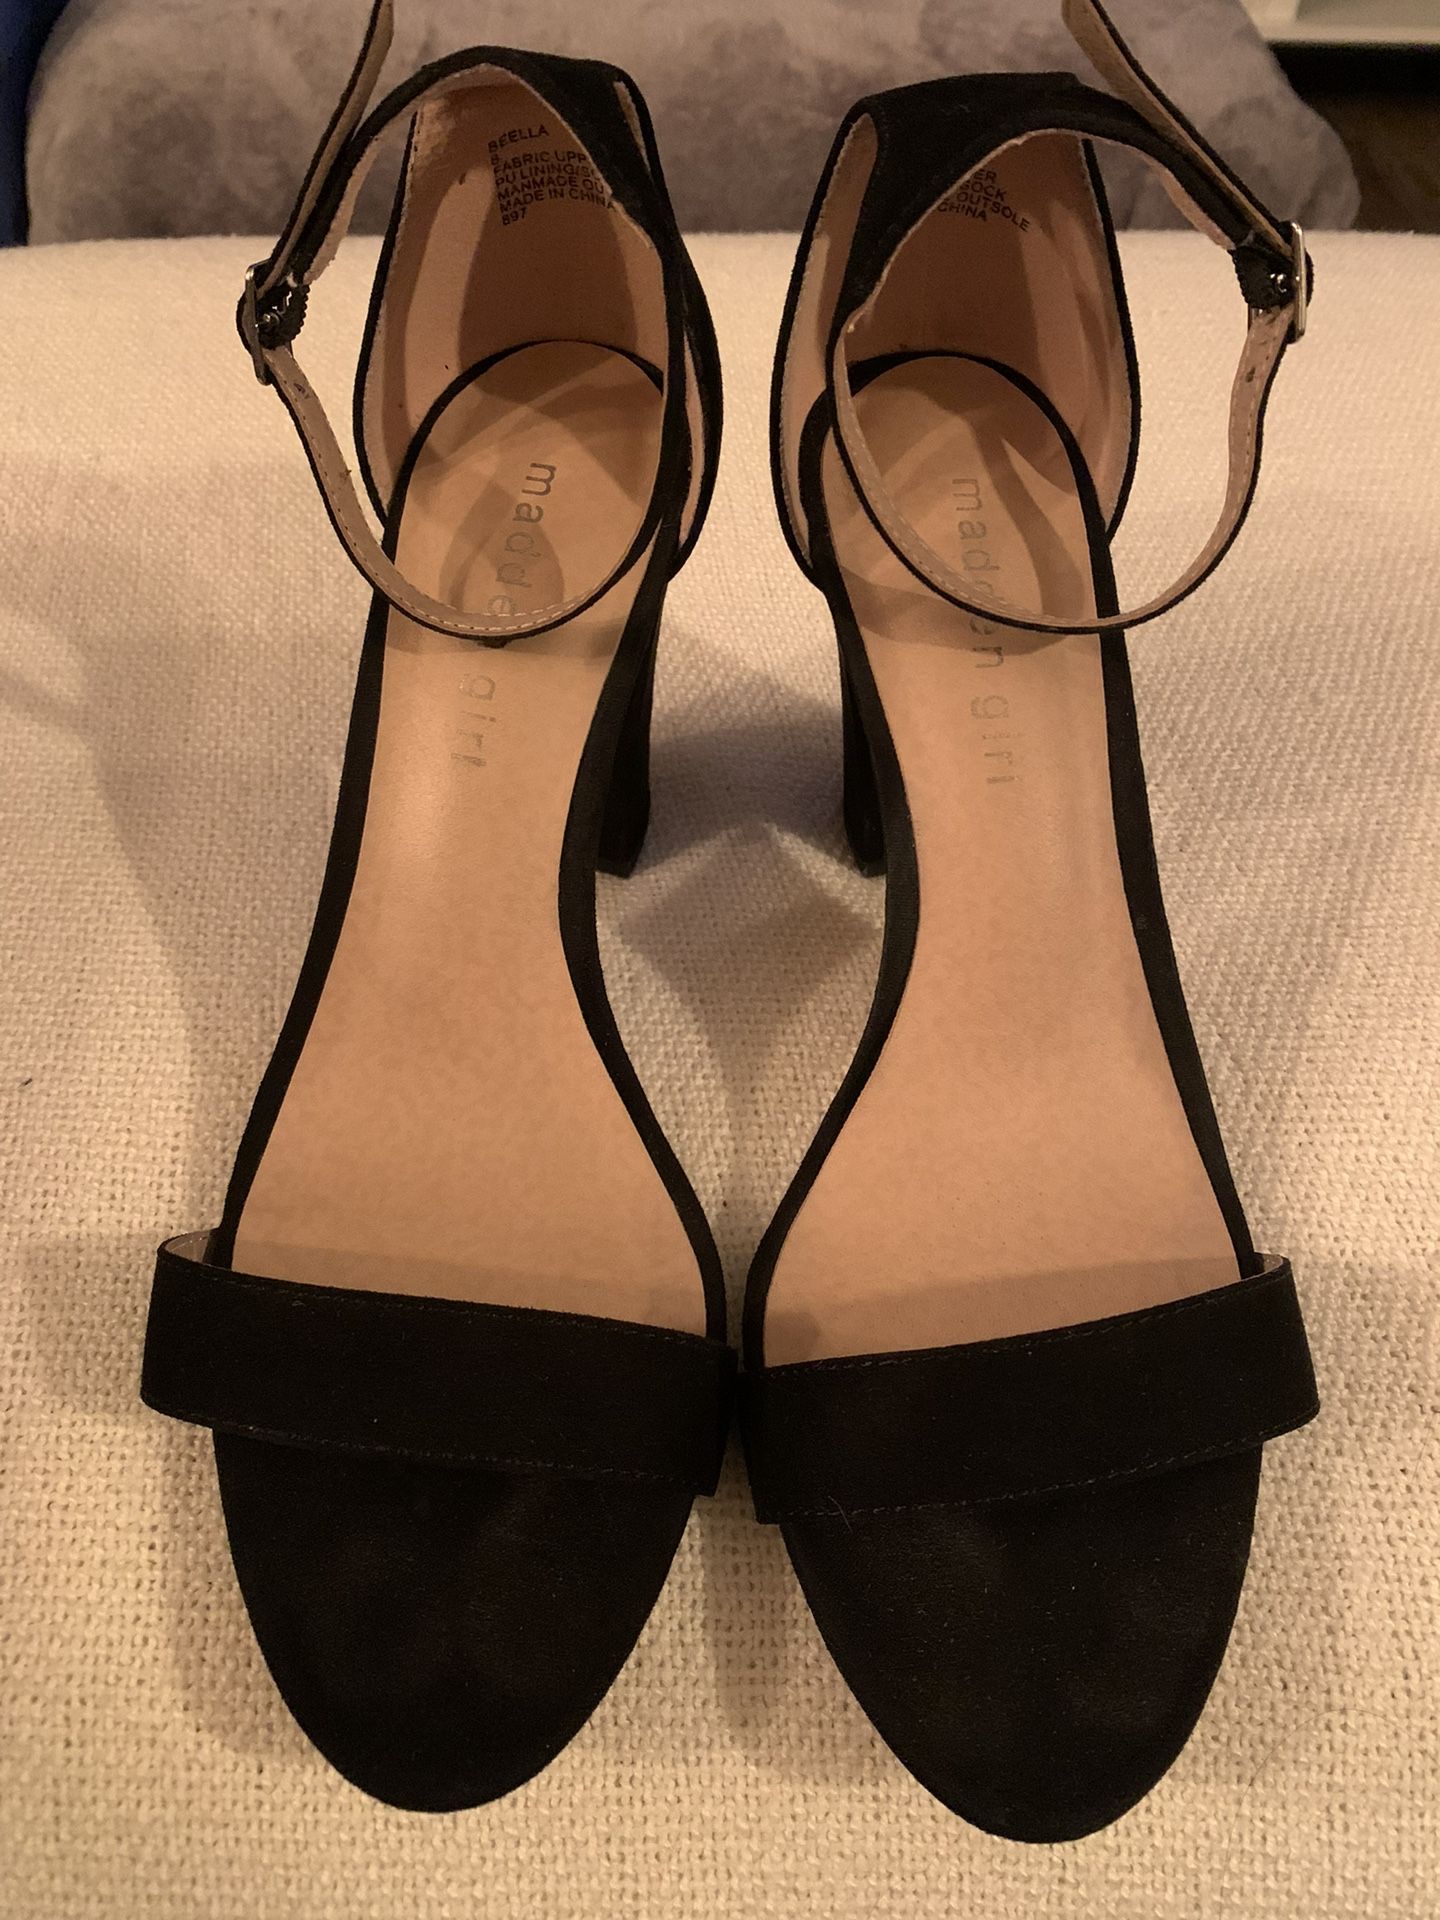 Black Madden Girl heels size 8